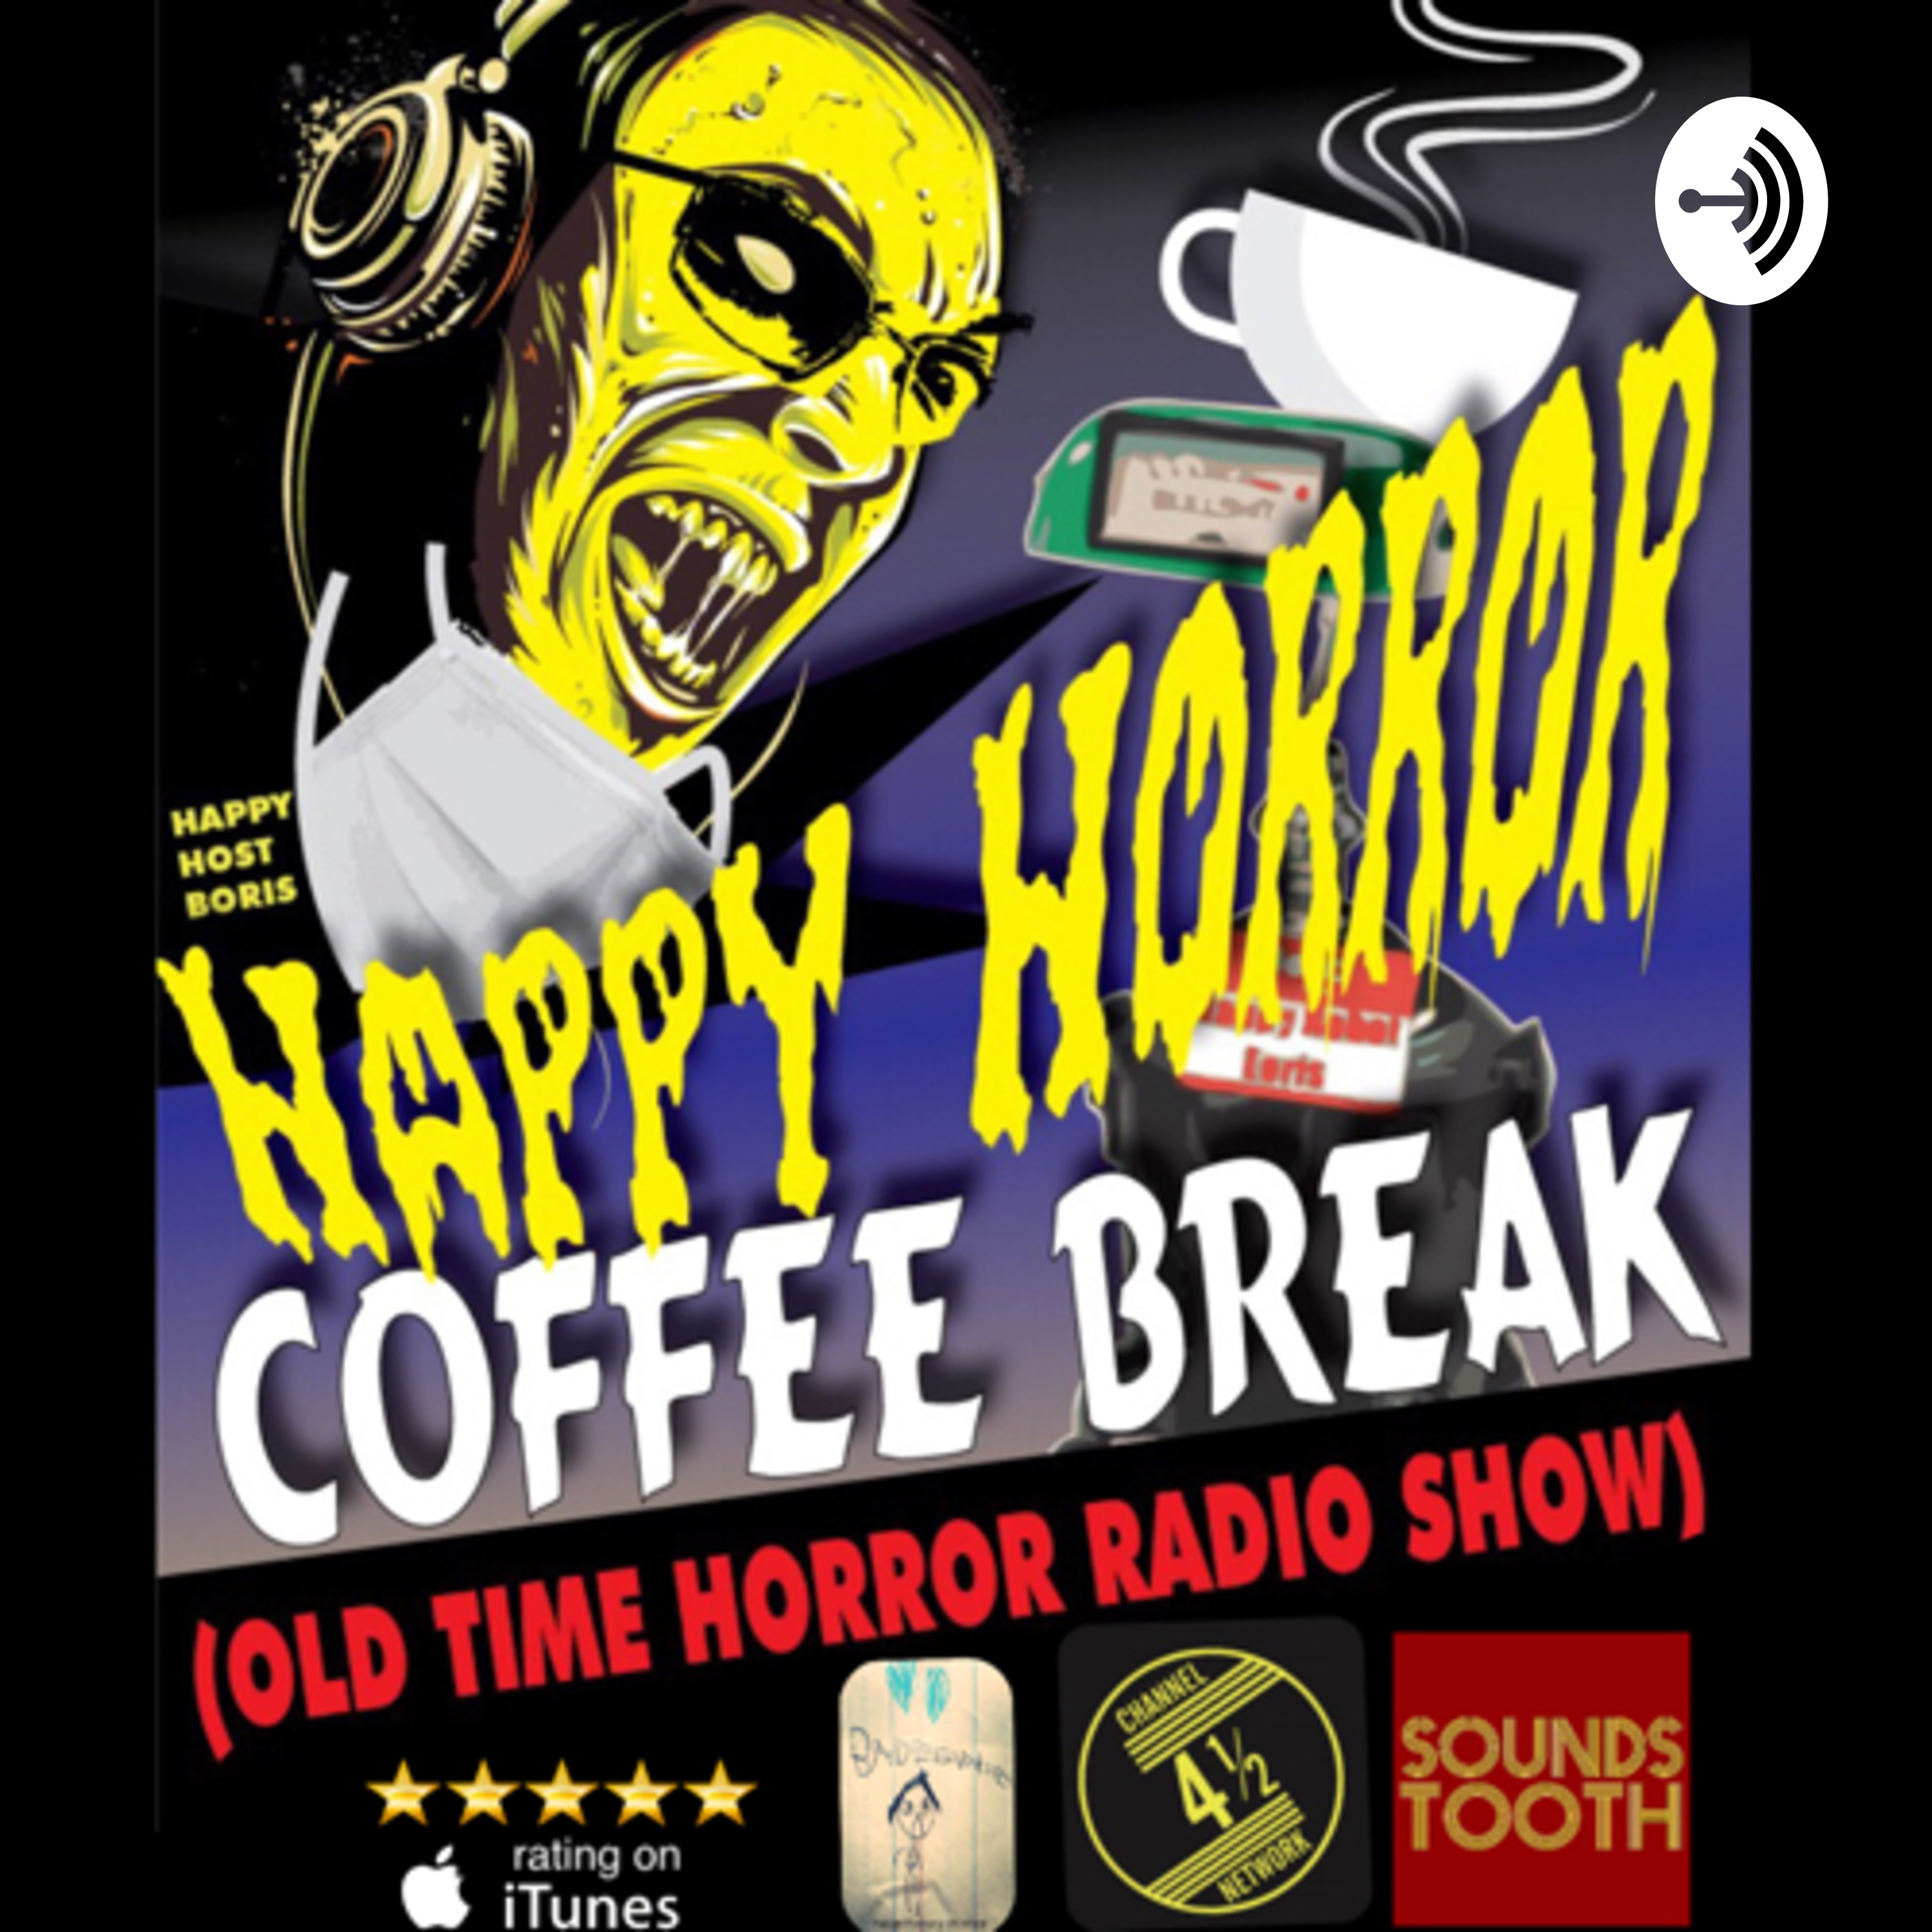 Happy Horror Coffee Break (old time horror radio show) (Trailer)